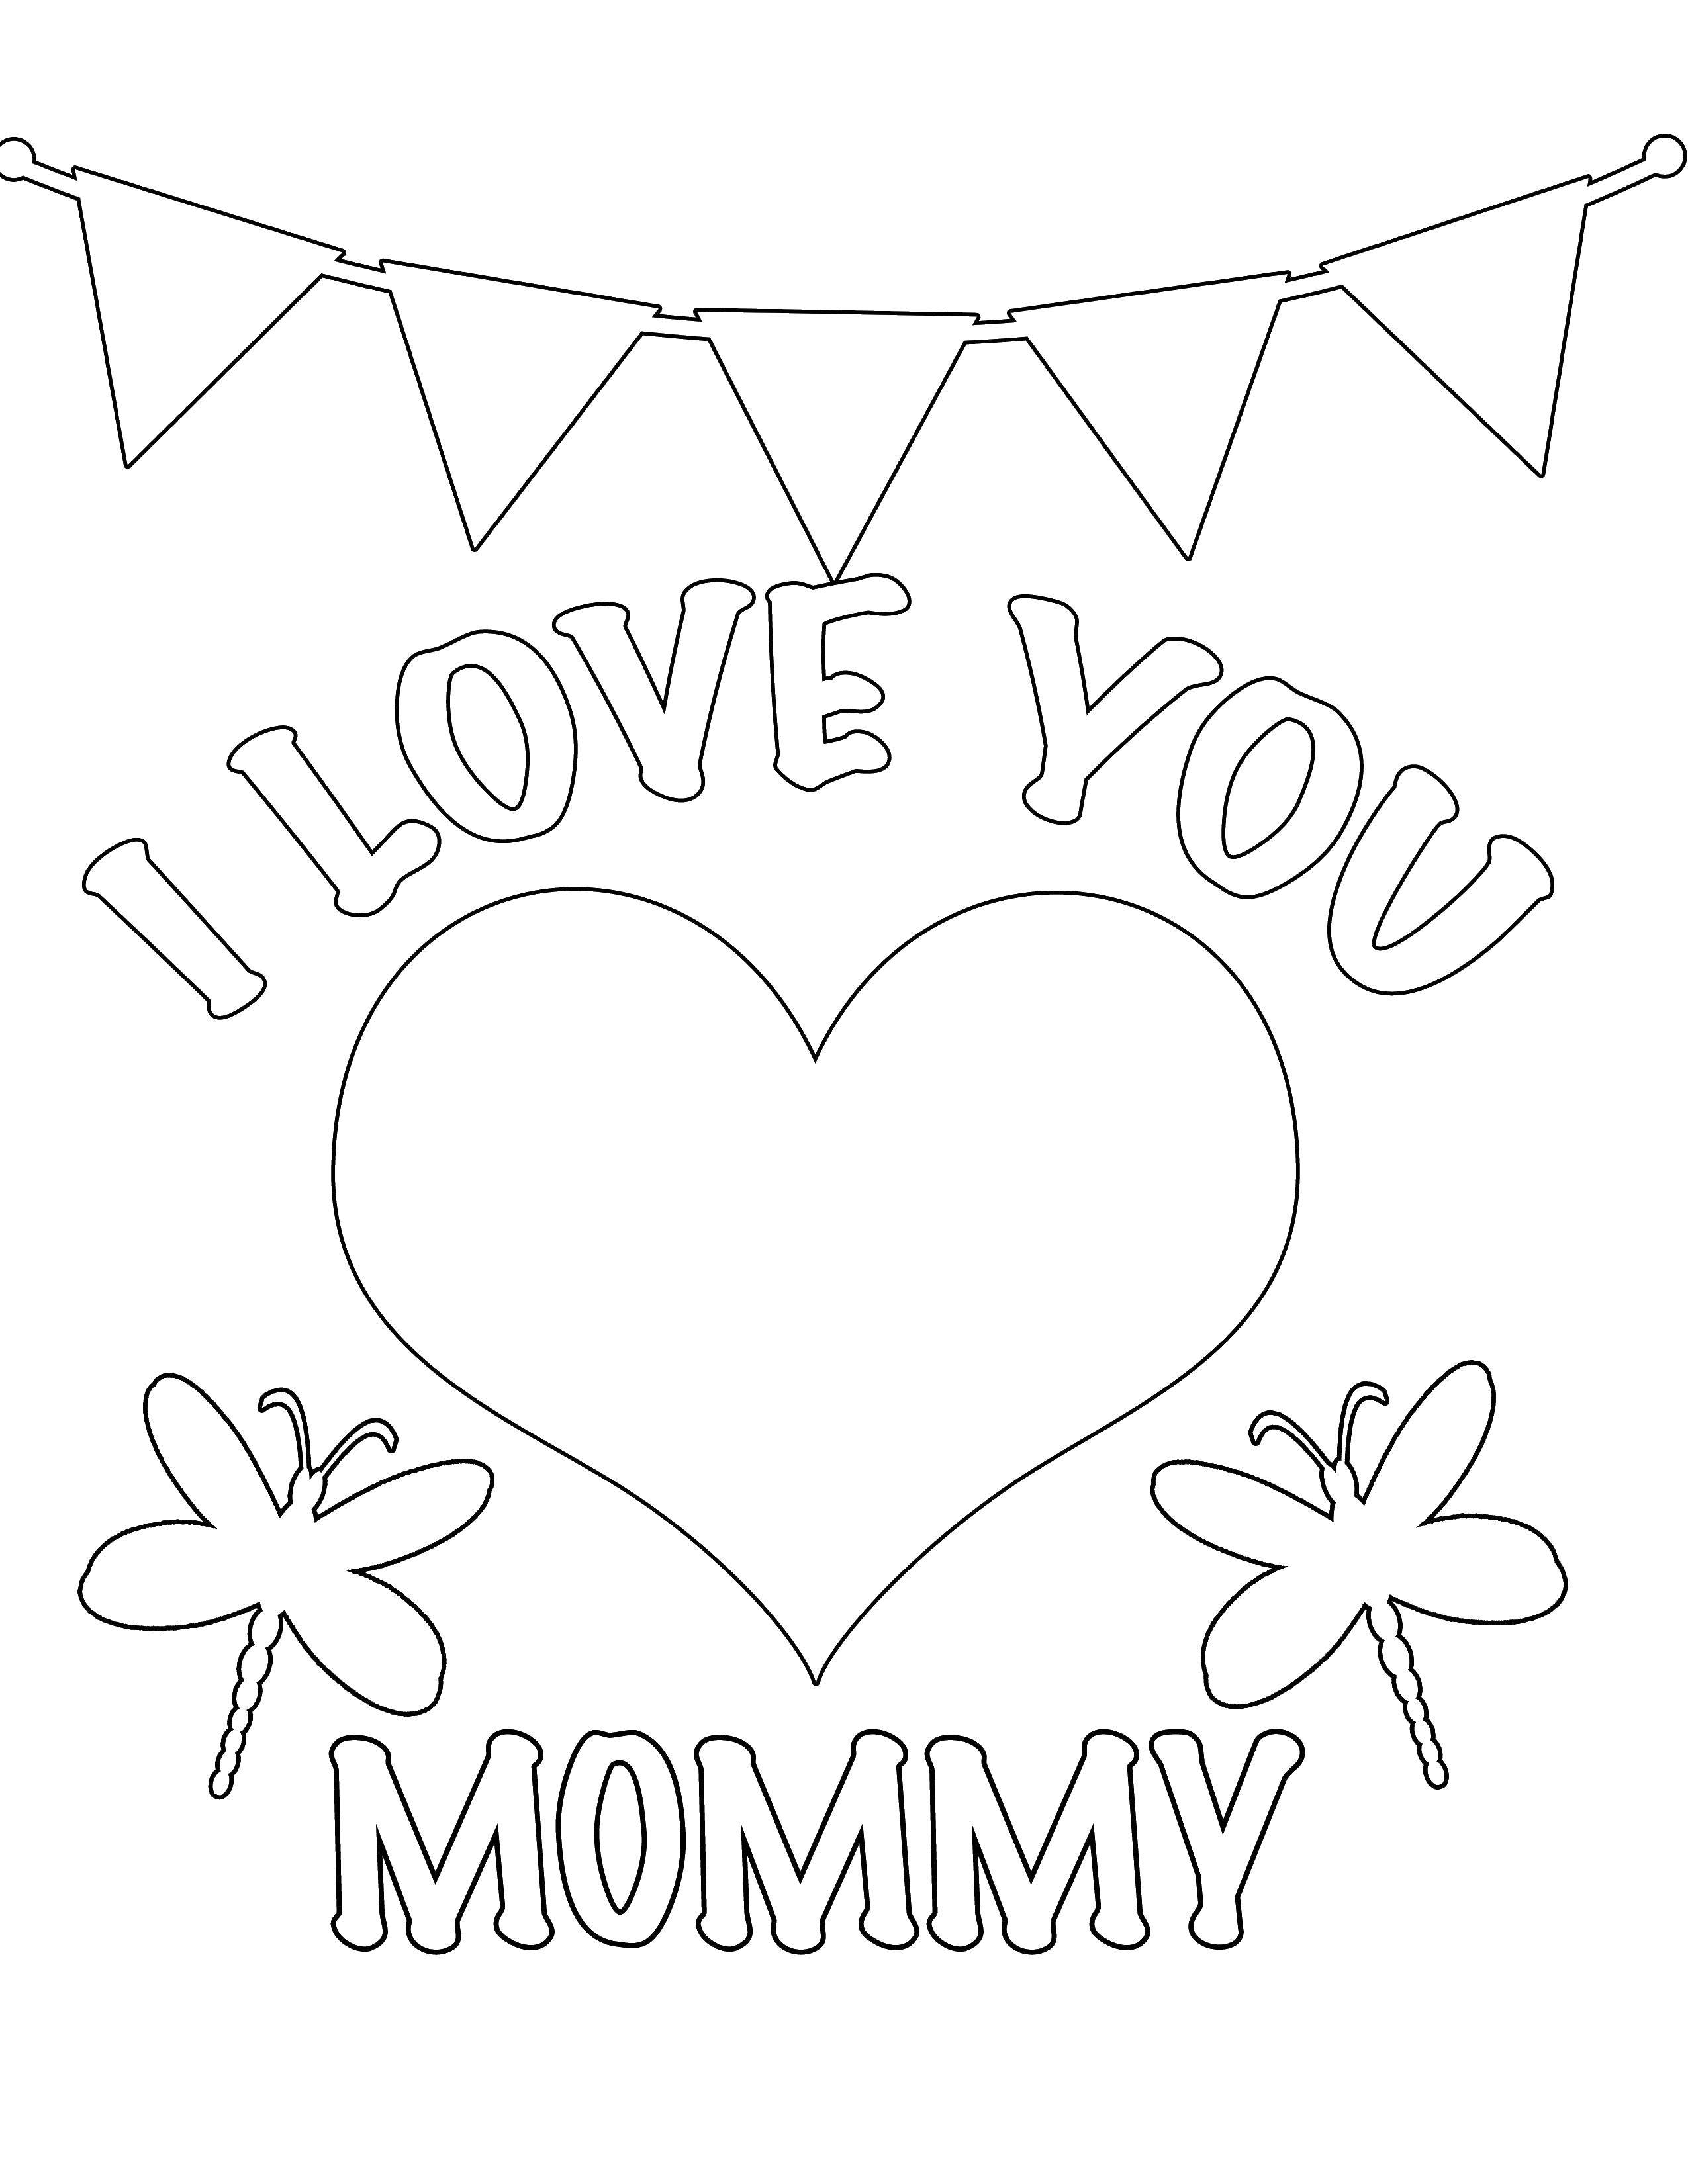 Coloring I love you mom. Category I love you. Tags:  I love you, mom.